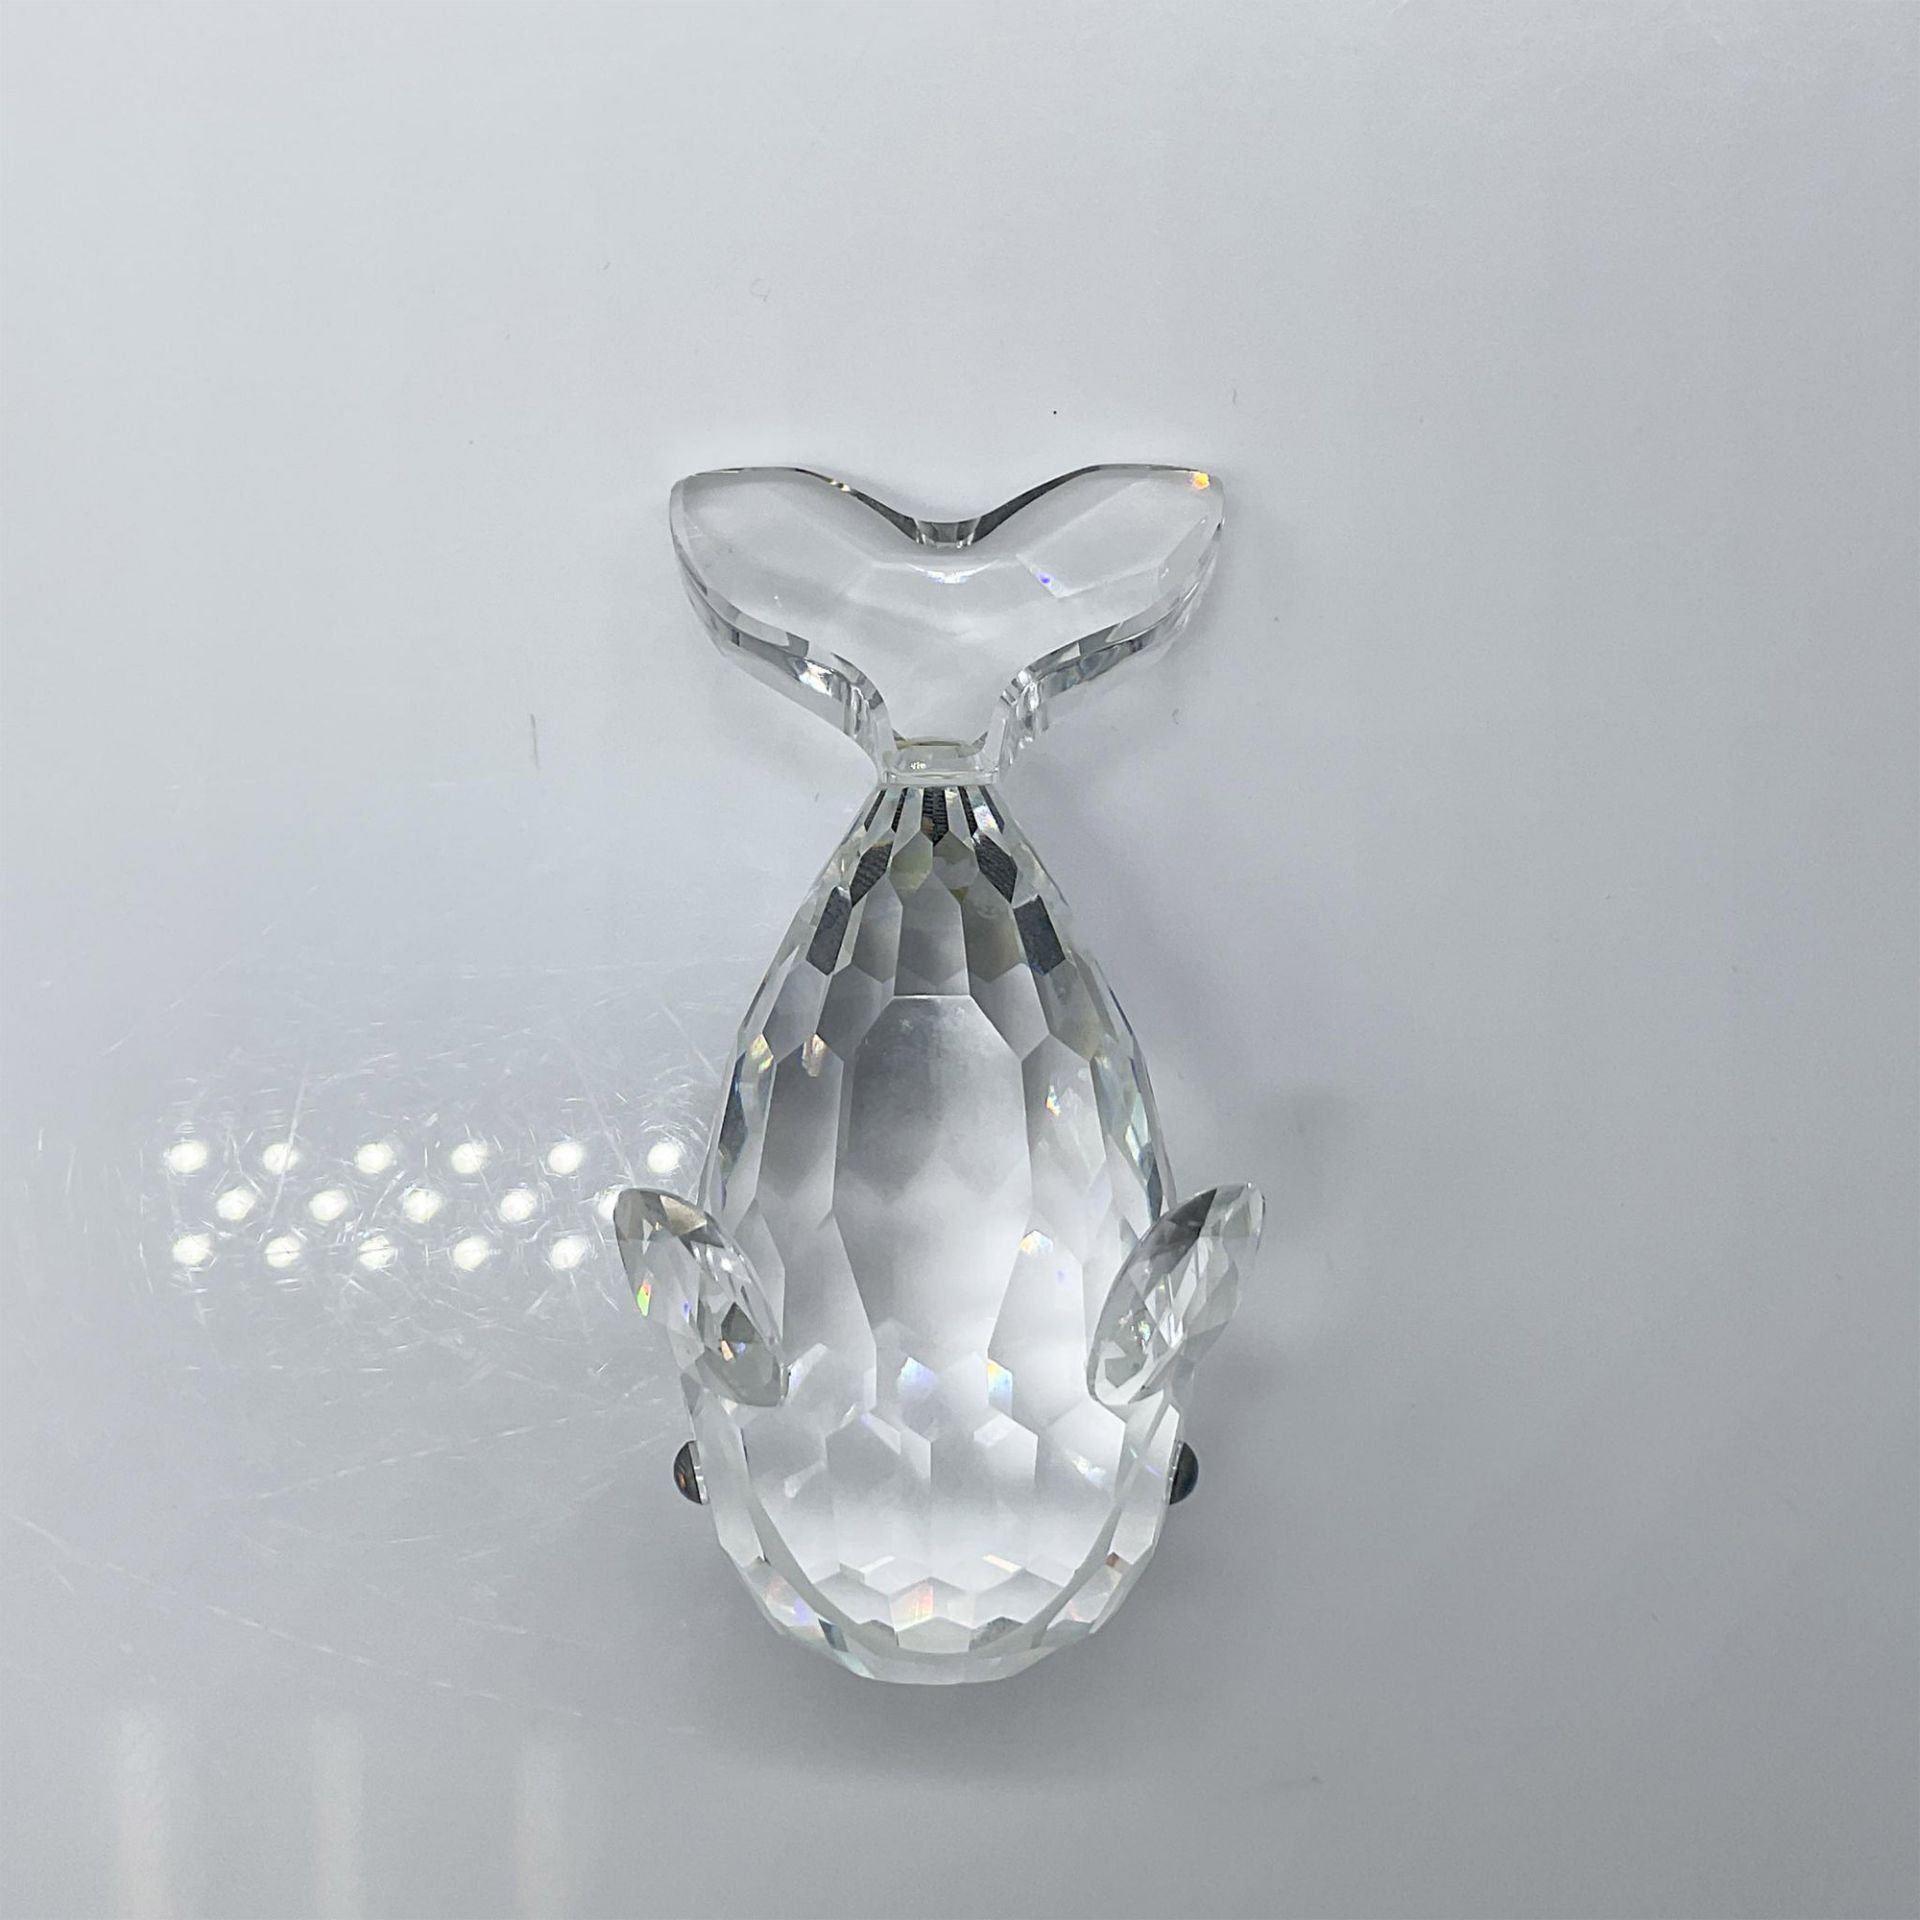 Swarovski Crystal Figurine, Whale - Image 3 of 3